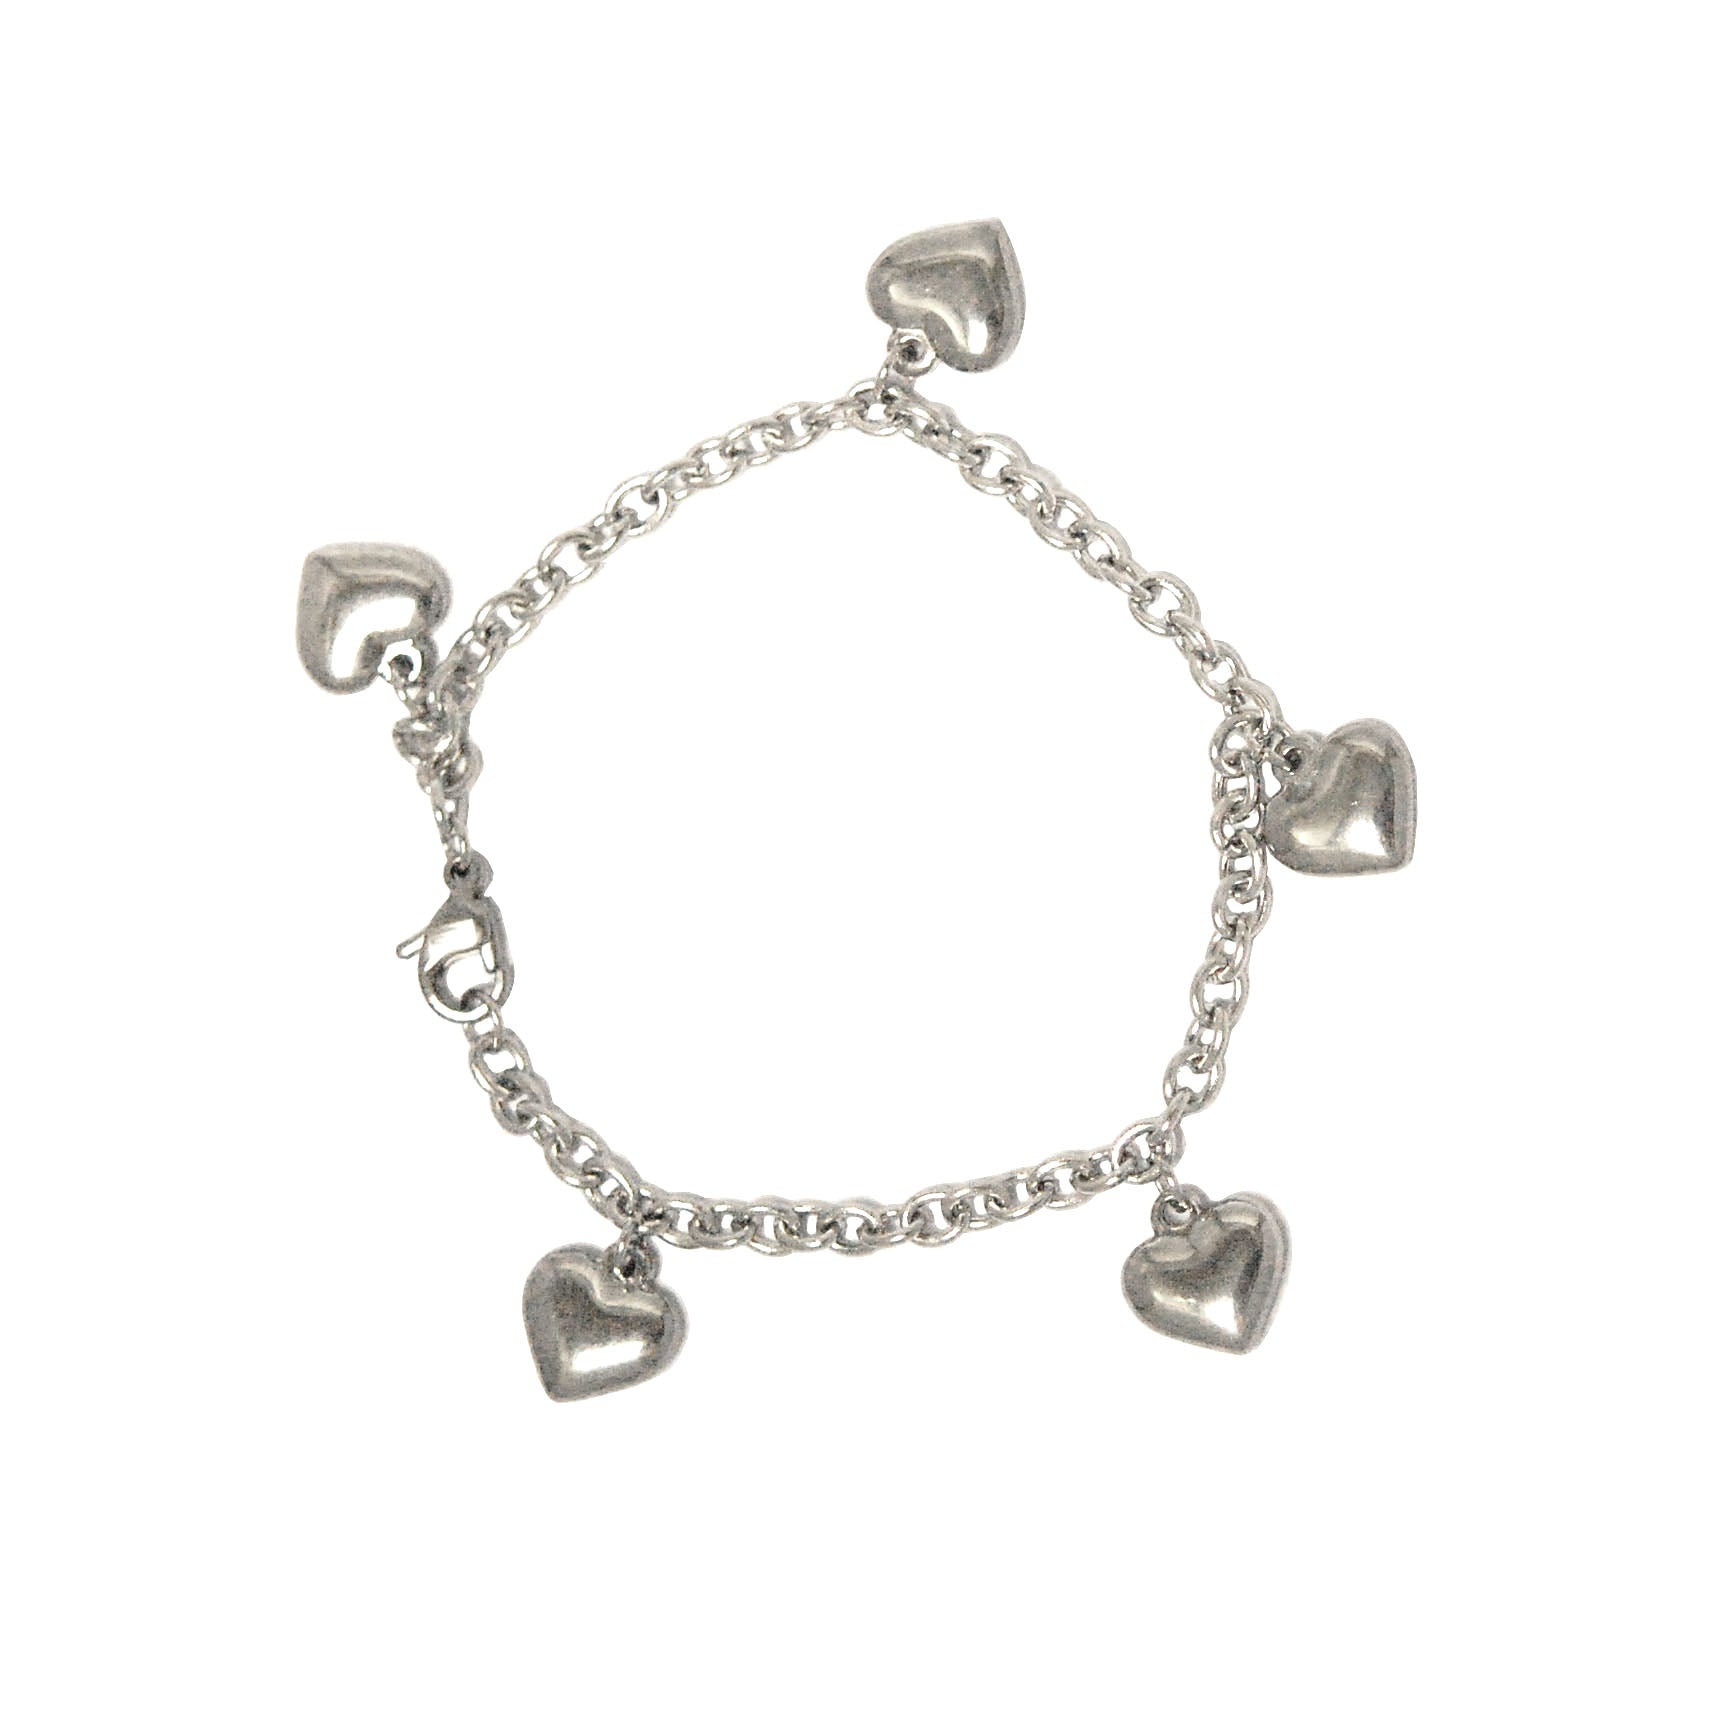 ESBL 5688: Five Heart Charm Bracelet